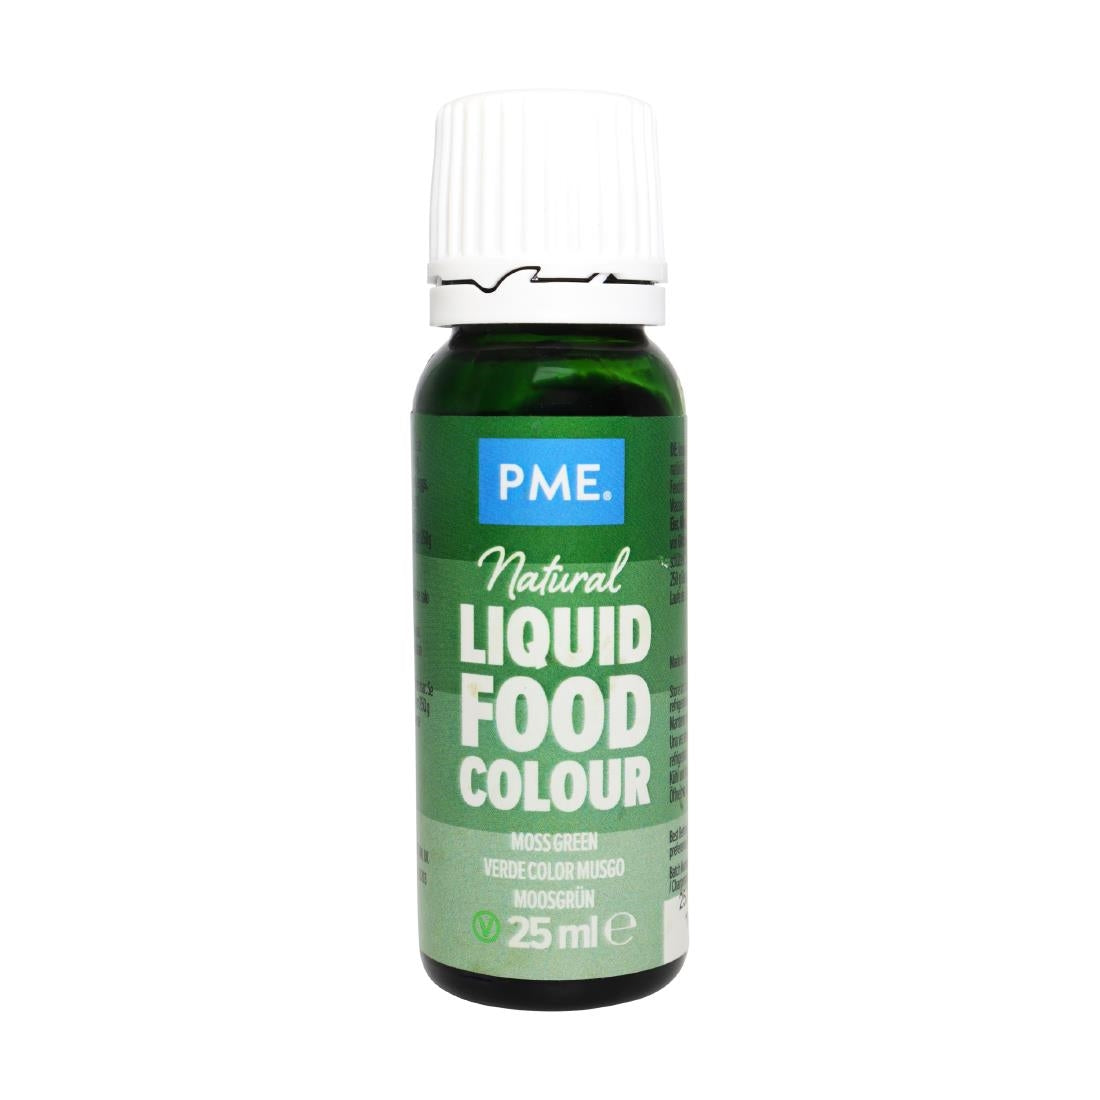 HU272 PME 100% Natural Food Colour - Moss Green 25g